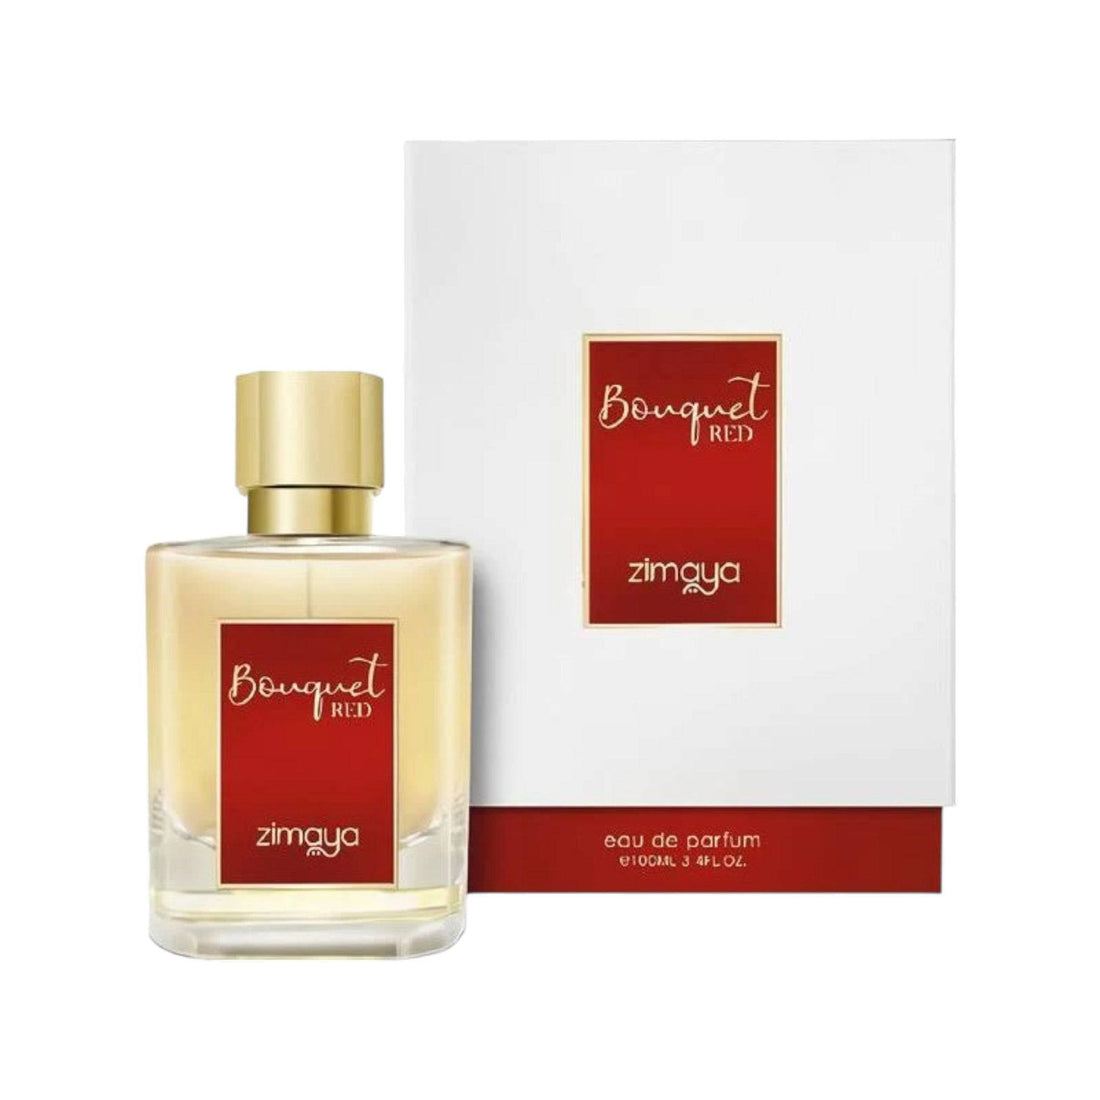 Bold 100ml bottle of Zimaya Brave Heart Eau De Parfum, symbolizing the adventurous spirit and sensual energy of the fragrance.